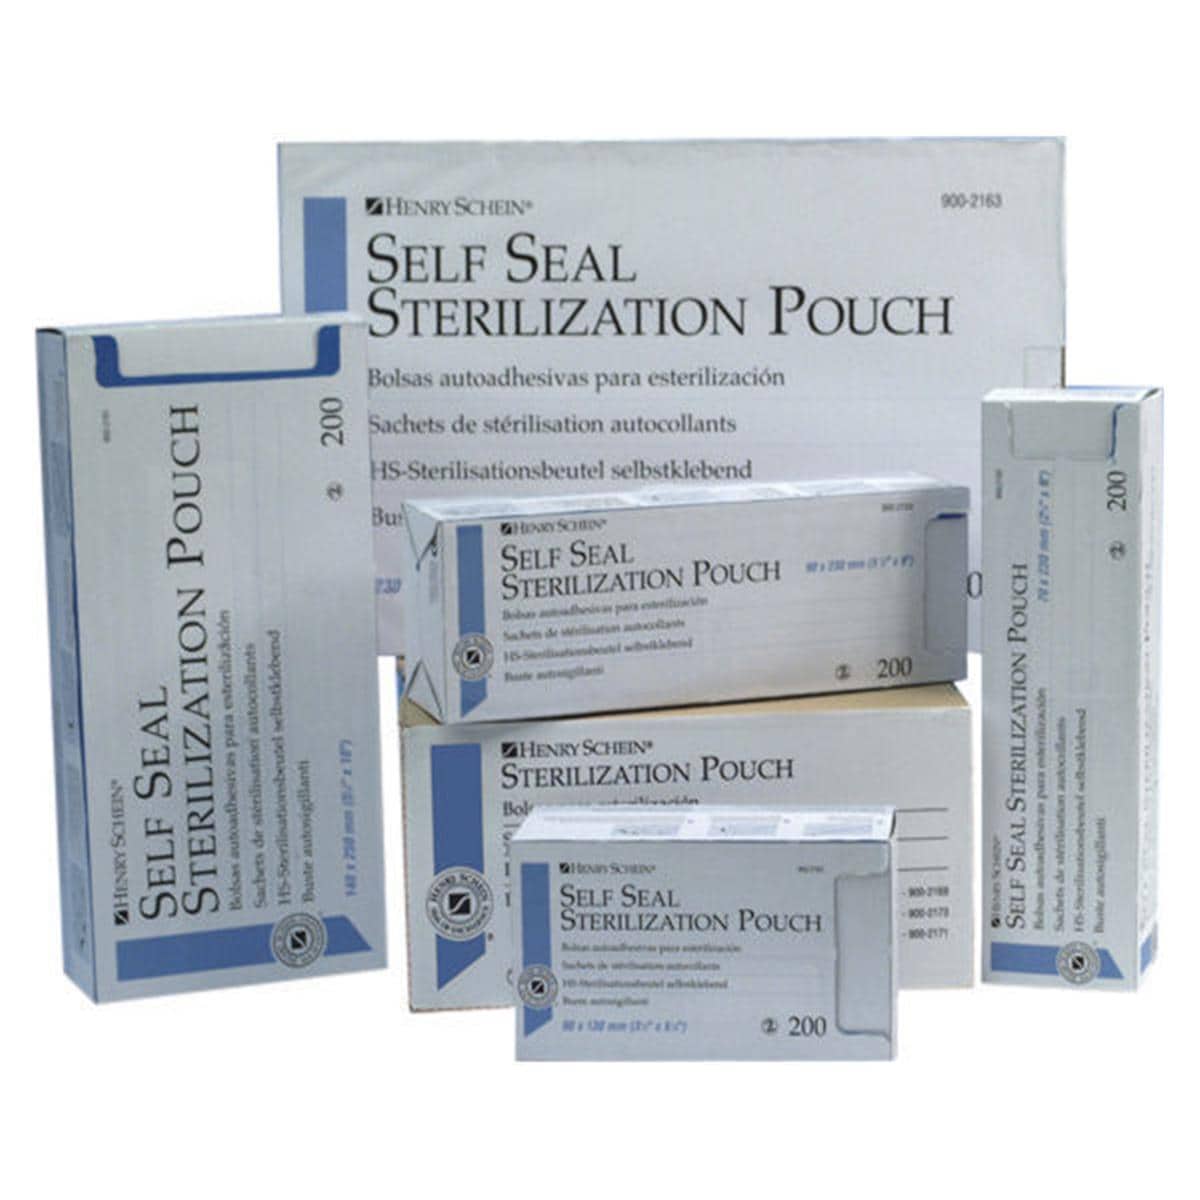 HS-Sterilisationsbeutel selbstklebend, Self seal Sterilisation Pouch - Größe 254 x 381 mm, Packung 200 Stück